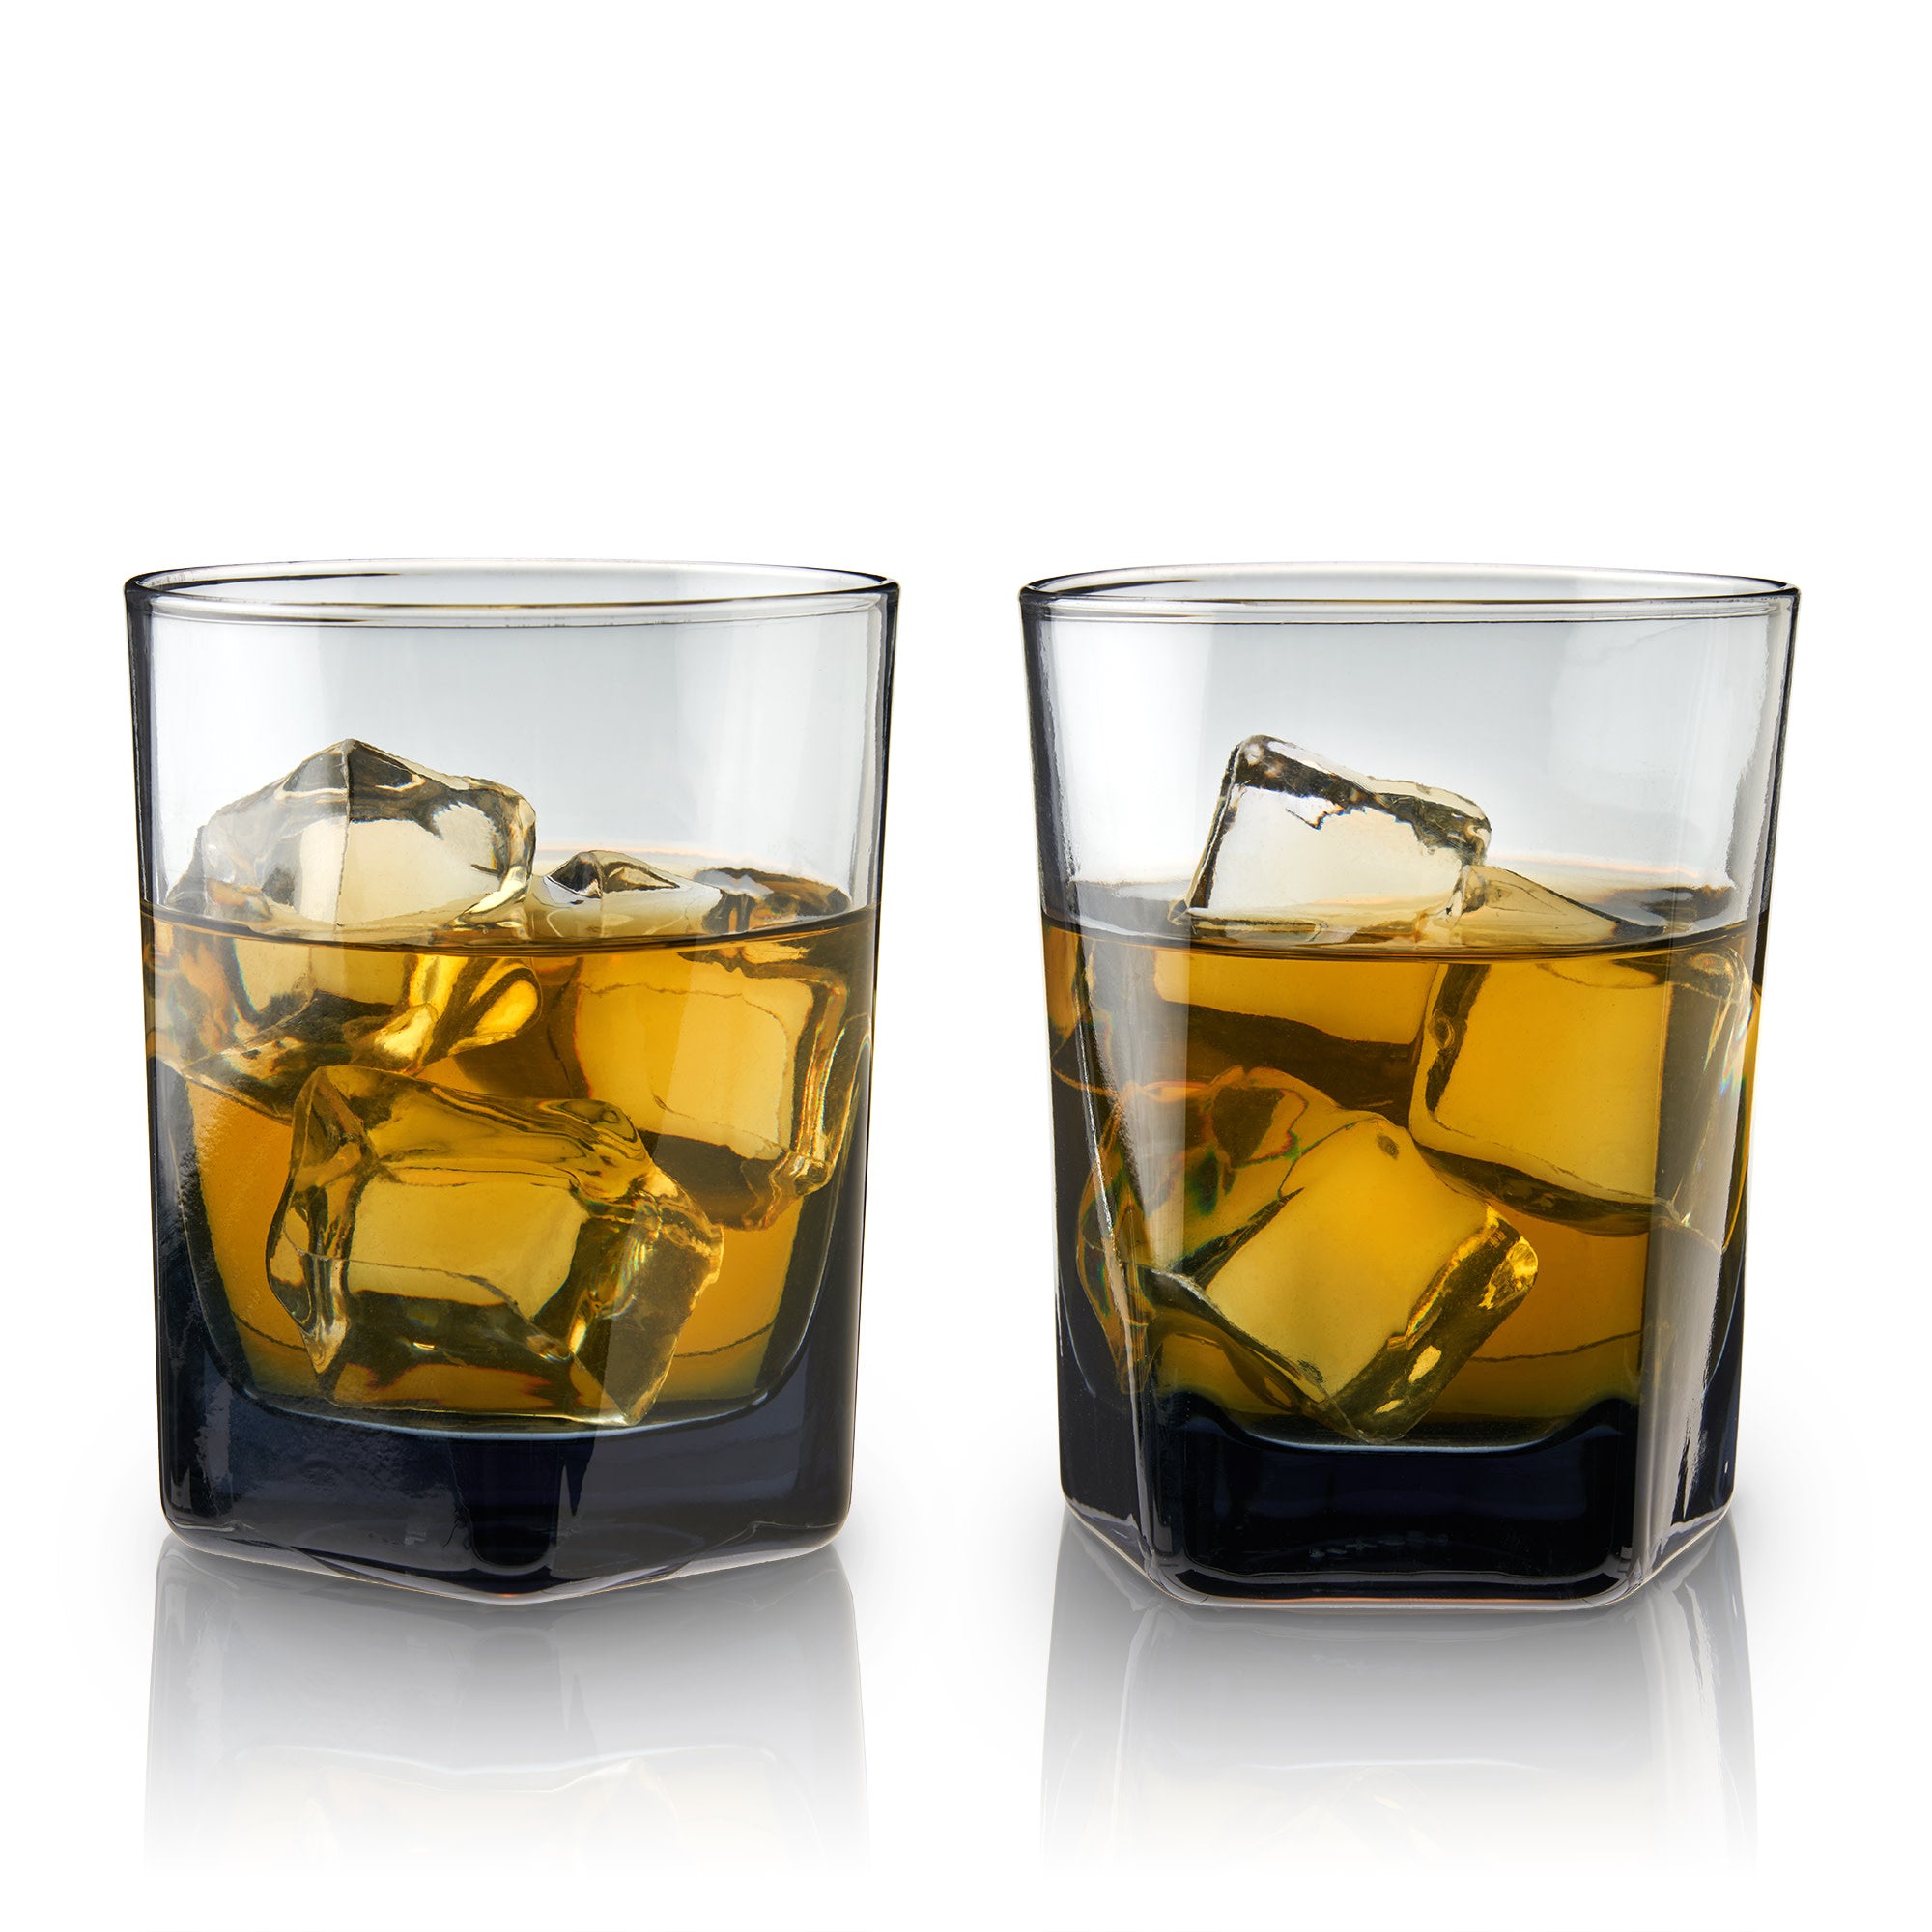 Smoke Double Old Fashioned Glasses by Viski® (9541) Drinkware Viski